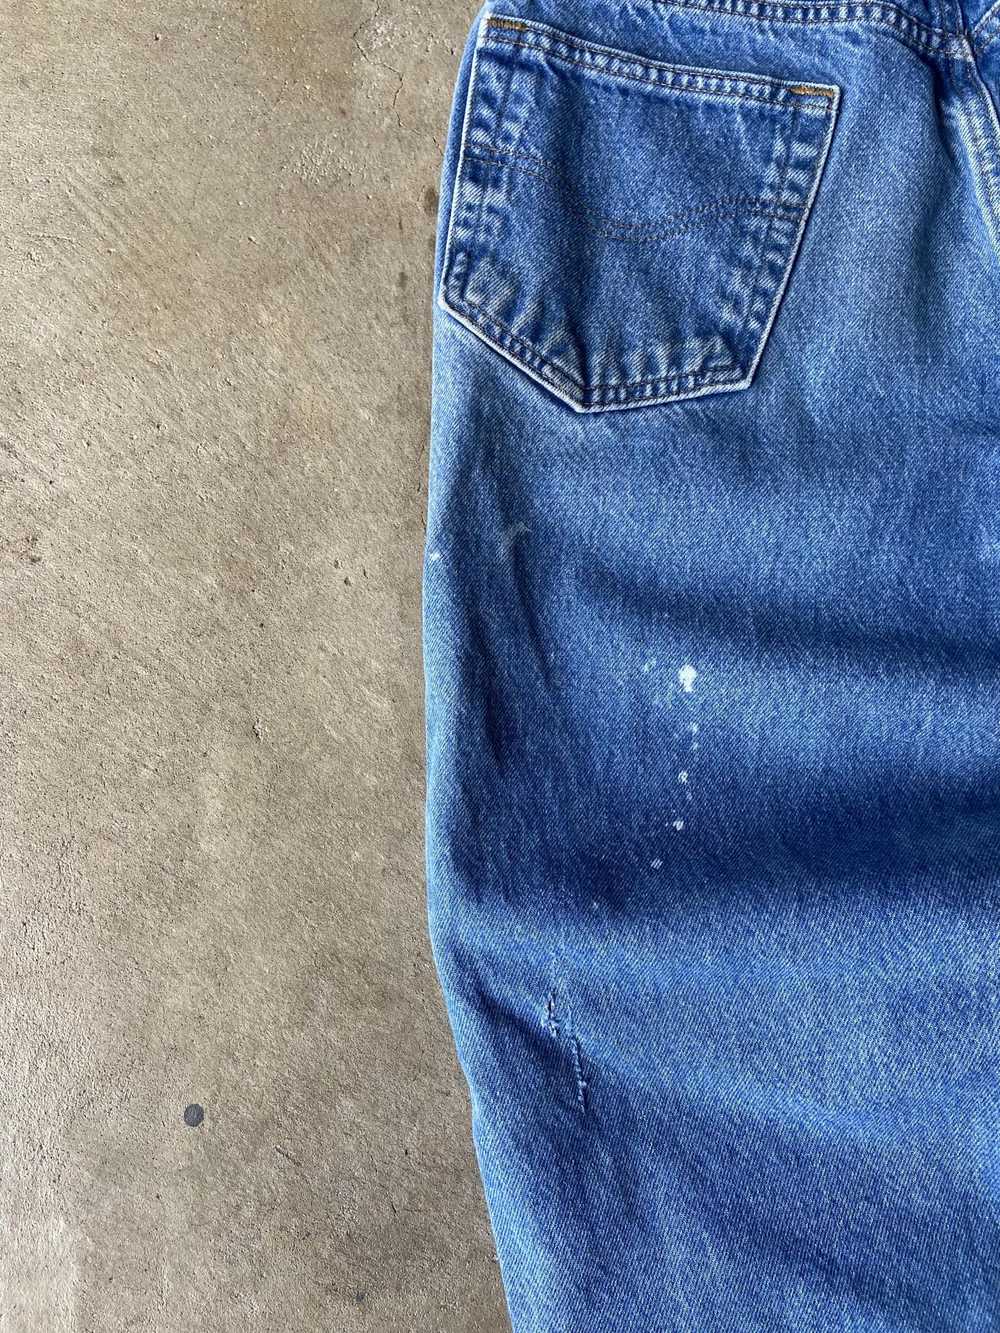 Carhartt Carhartt Thrashed Painter's Blue Jeans - image 8